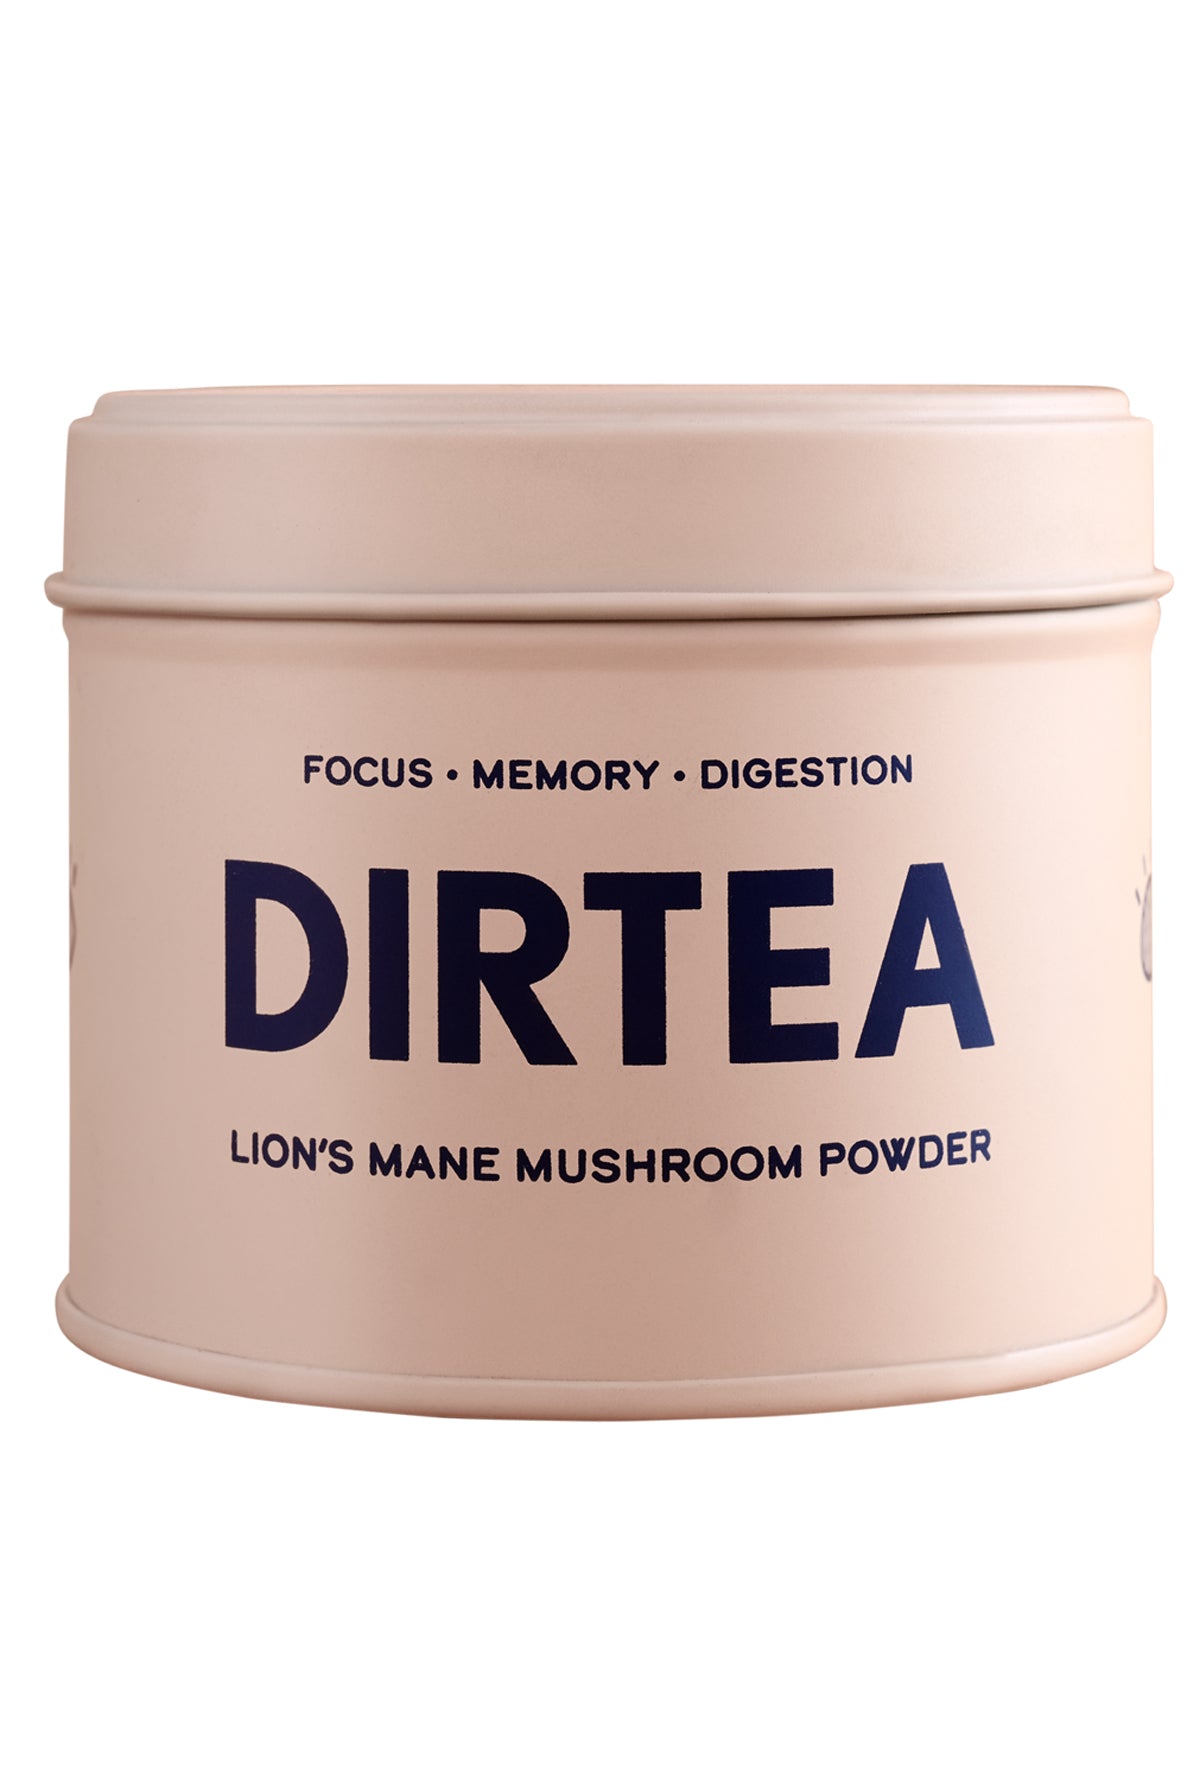 DIRTEA Lion's Mane Mushroom Powder - 30 servings